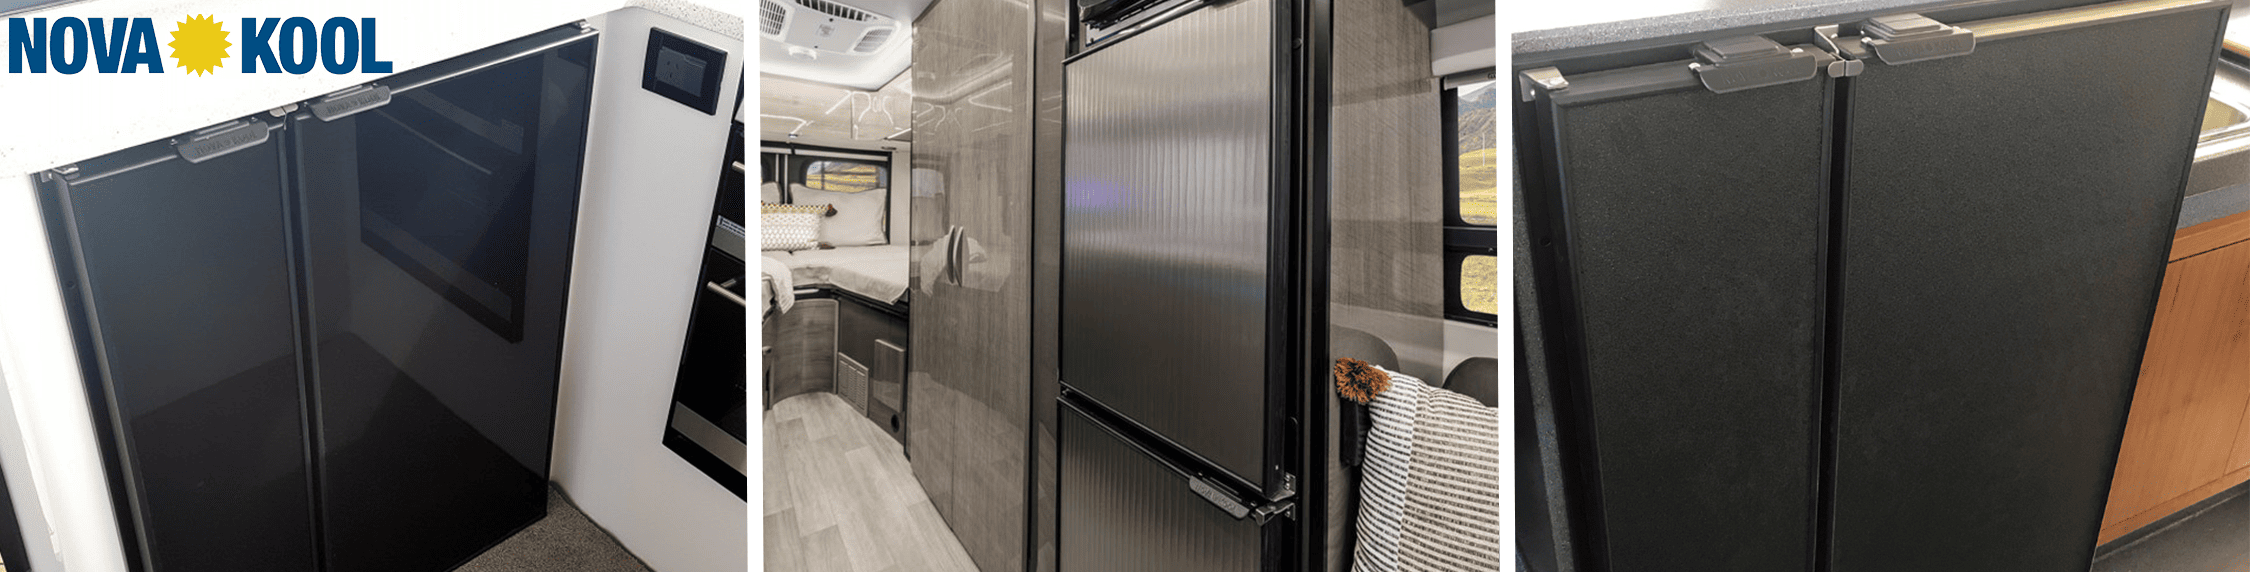 Nova Kool Refrigerators & Freezers